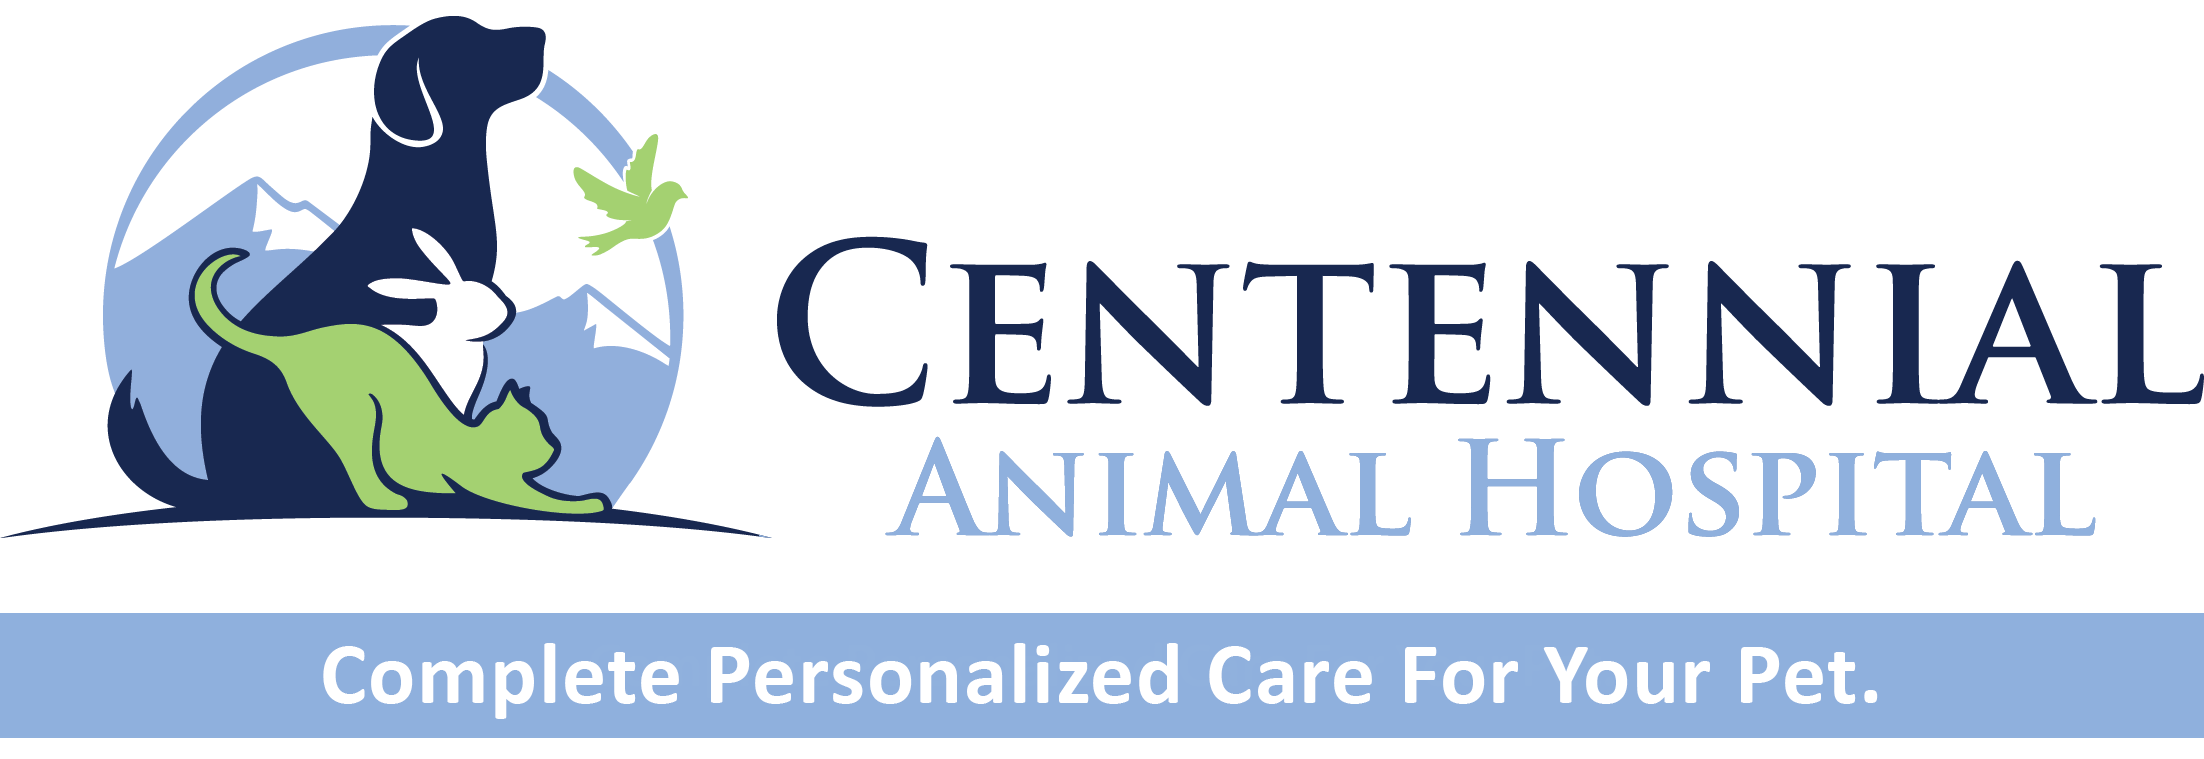 Animal Hospital Logo - Colorado Springs, CO Veterinarian - Centennial Animal Hospital - Dr ...